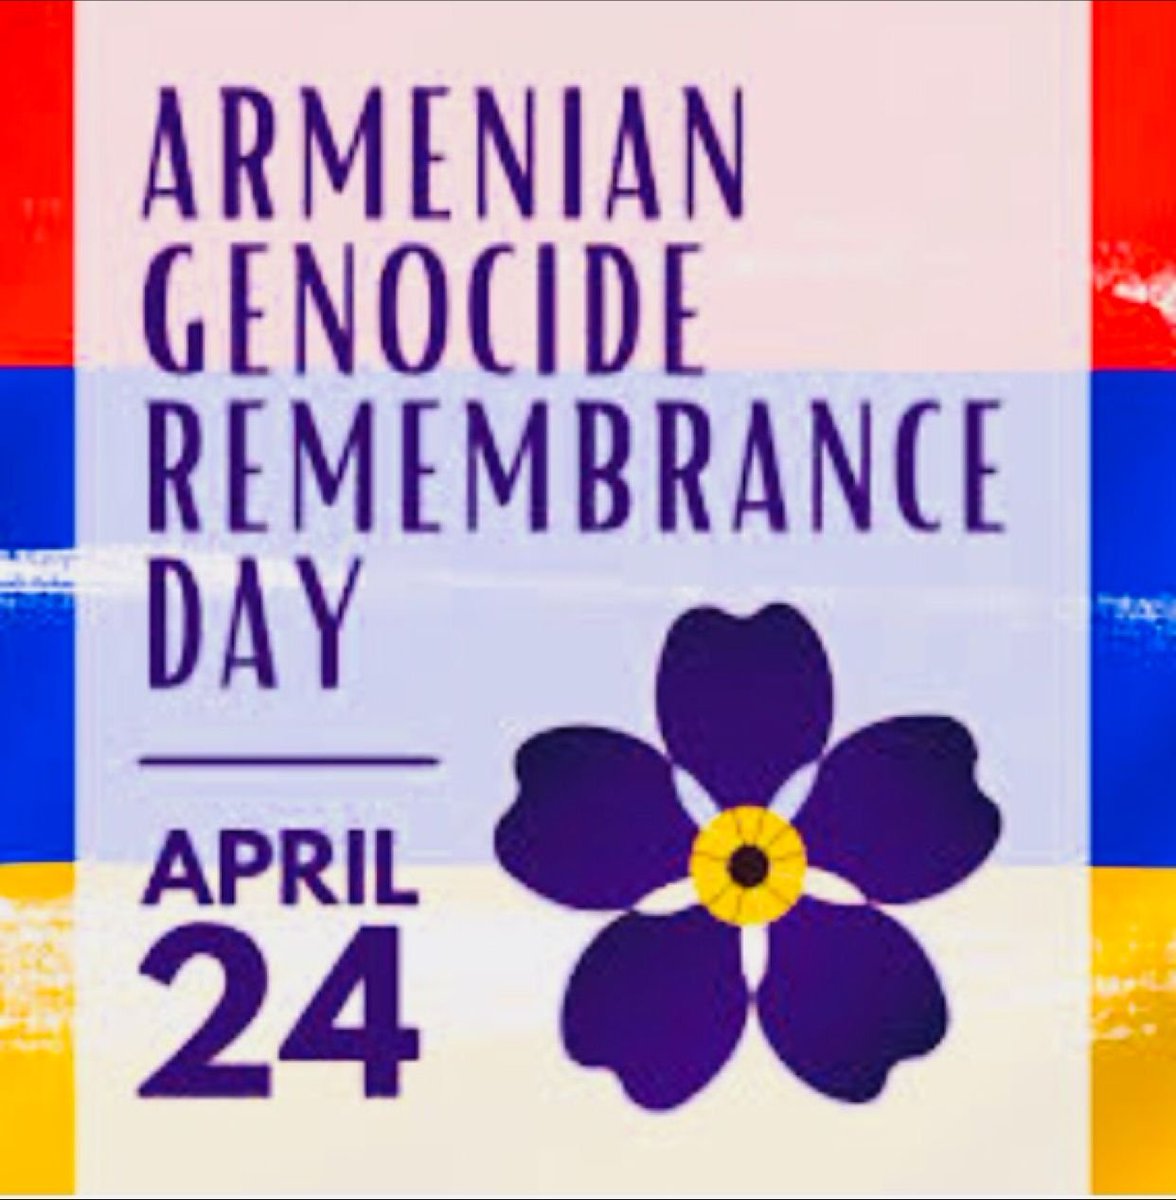 #ArmenianGenocide #TurkeyFailed #GenocideArmenien #Genocide1915 #GenocidioArmenio